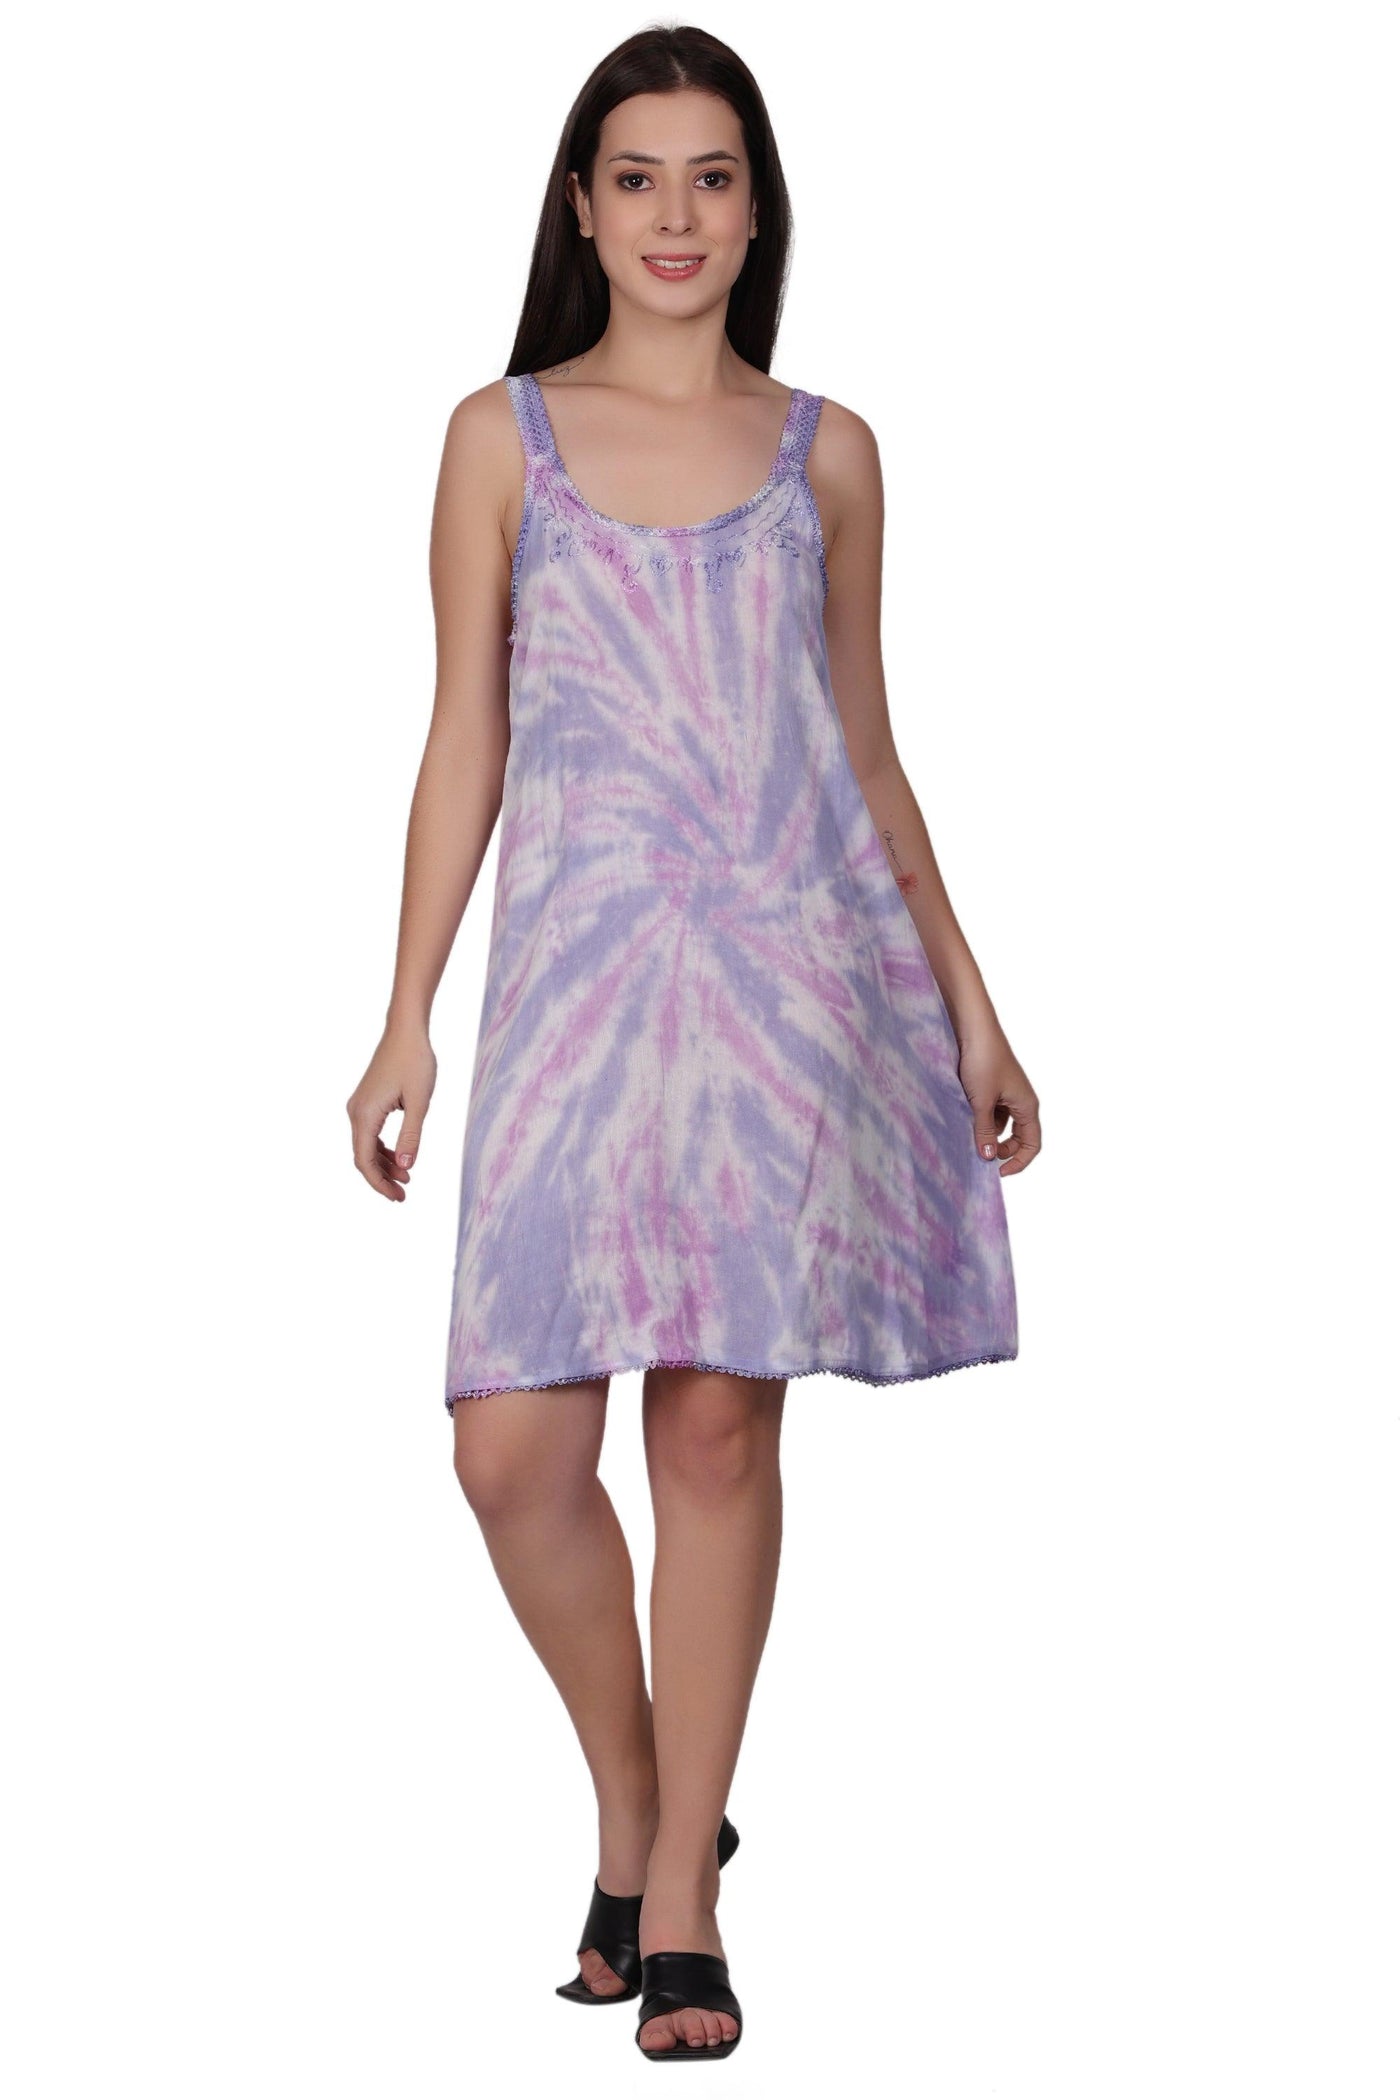 Laced Tie Dye Beach Dress 362212LACE  - Advance Apparels Inc